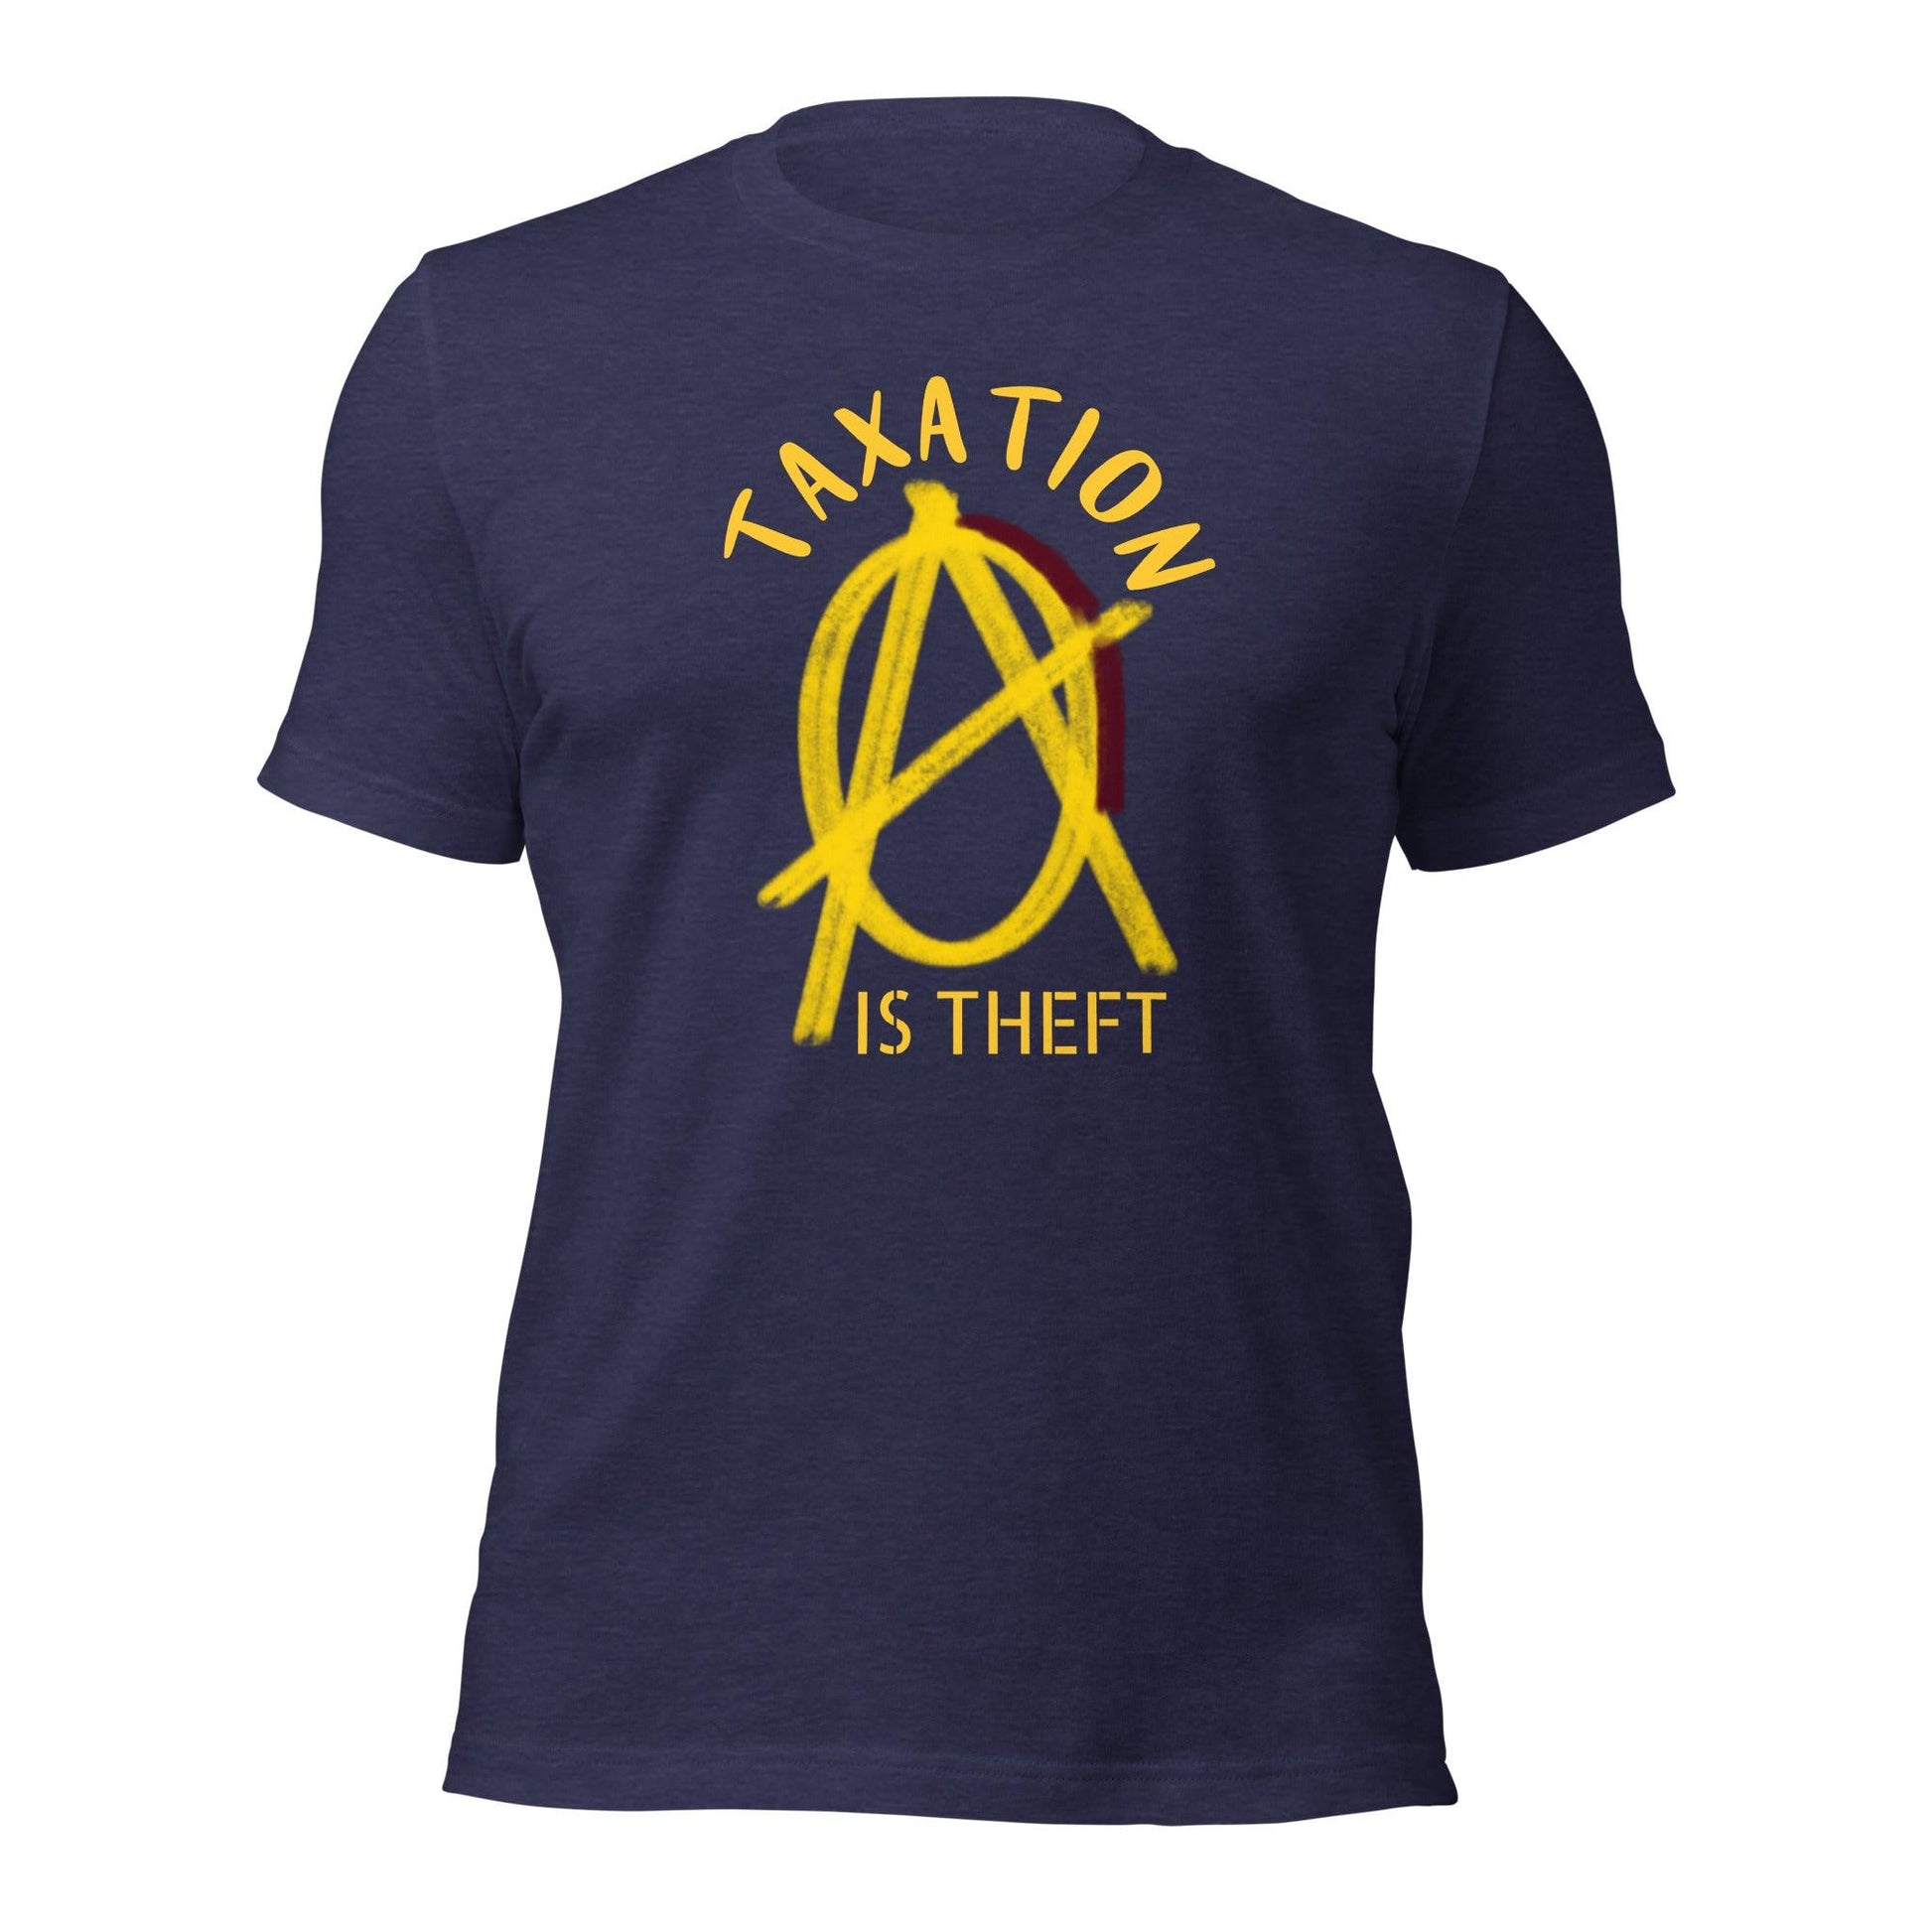 Anarchy Wear "Taxation Is Theft" Unisex t-shirt - AnarchyWear